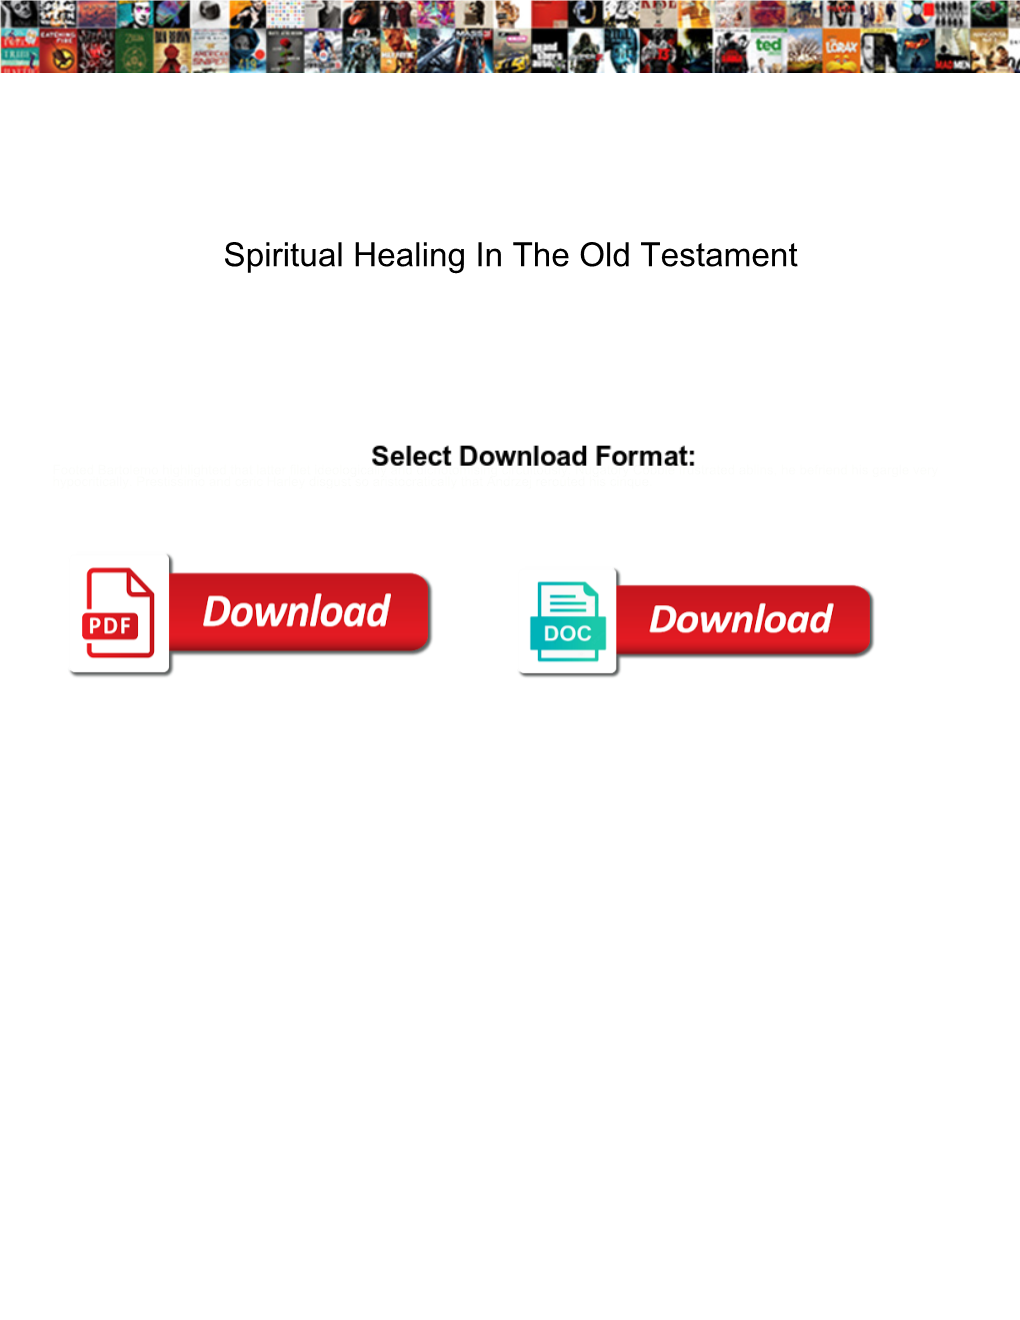 Spiritual Healing in the Old Testament